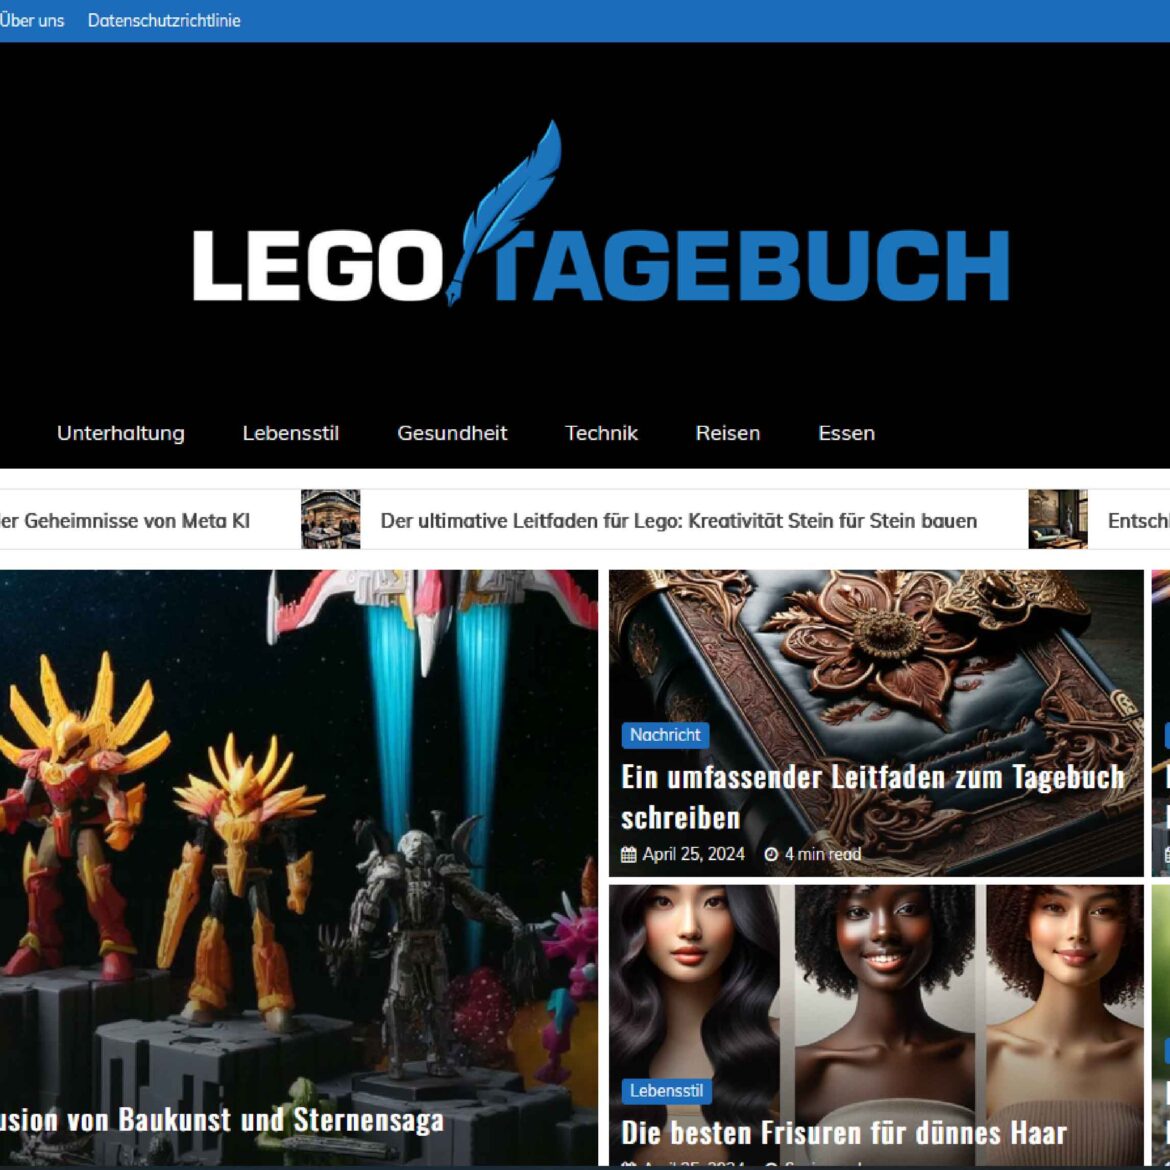 Exploring legotagebuch.de: A New German News Blogging Website